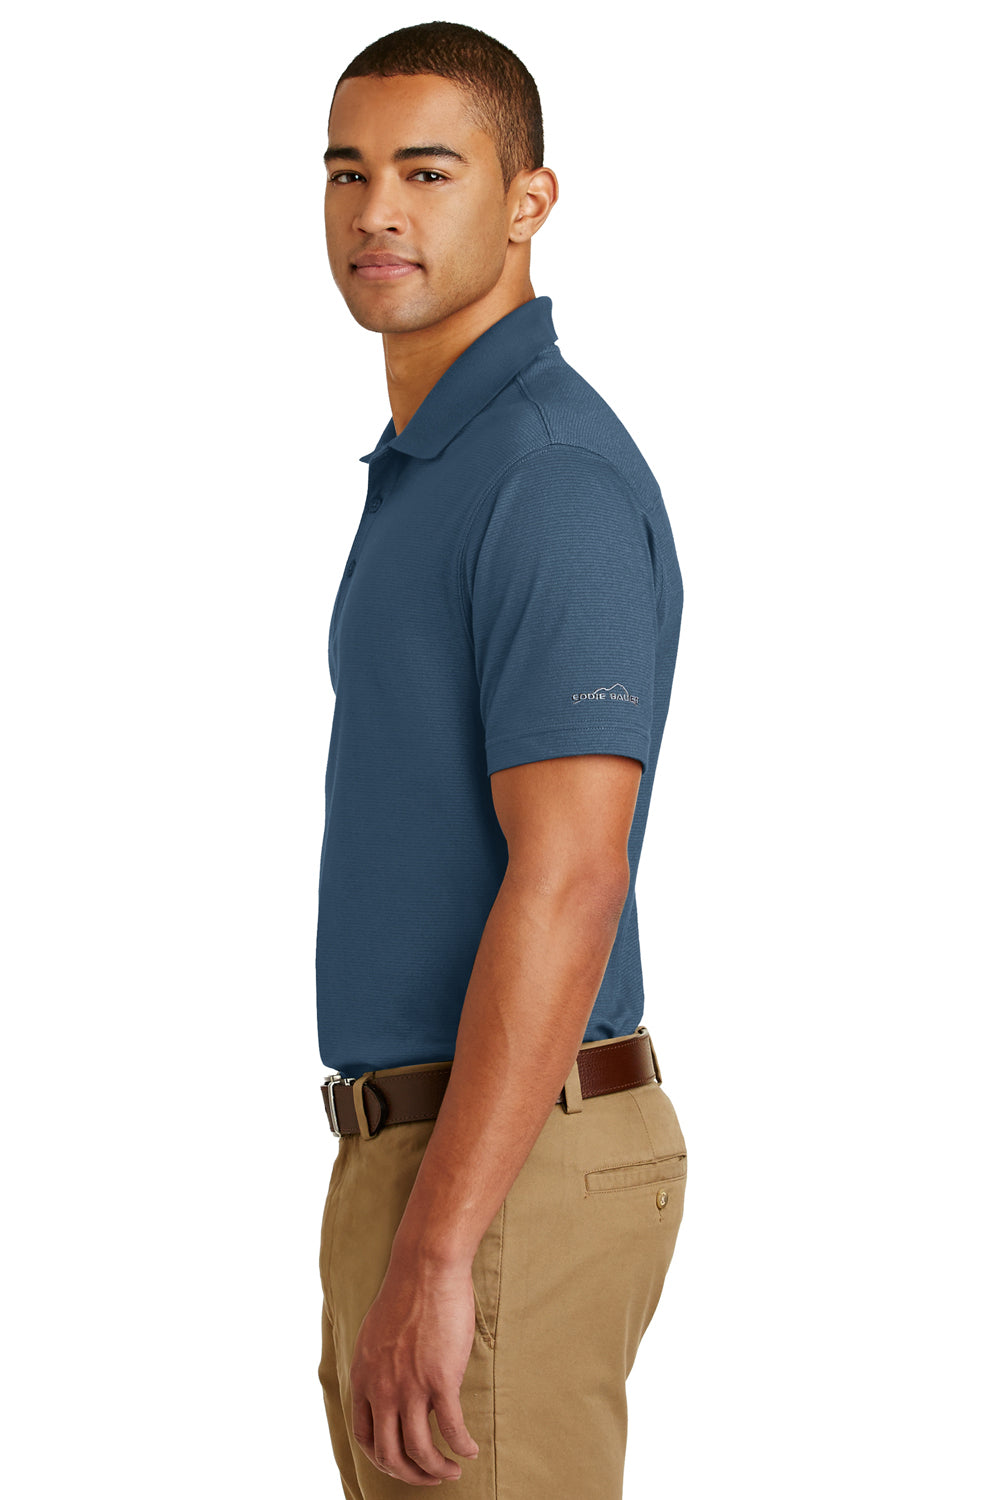 Eddie Bauer EB102 Mens Performance UV Protection Short Sleeve Polo Shirt Coast Blue Model Side